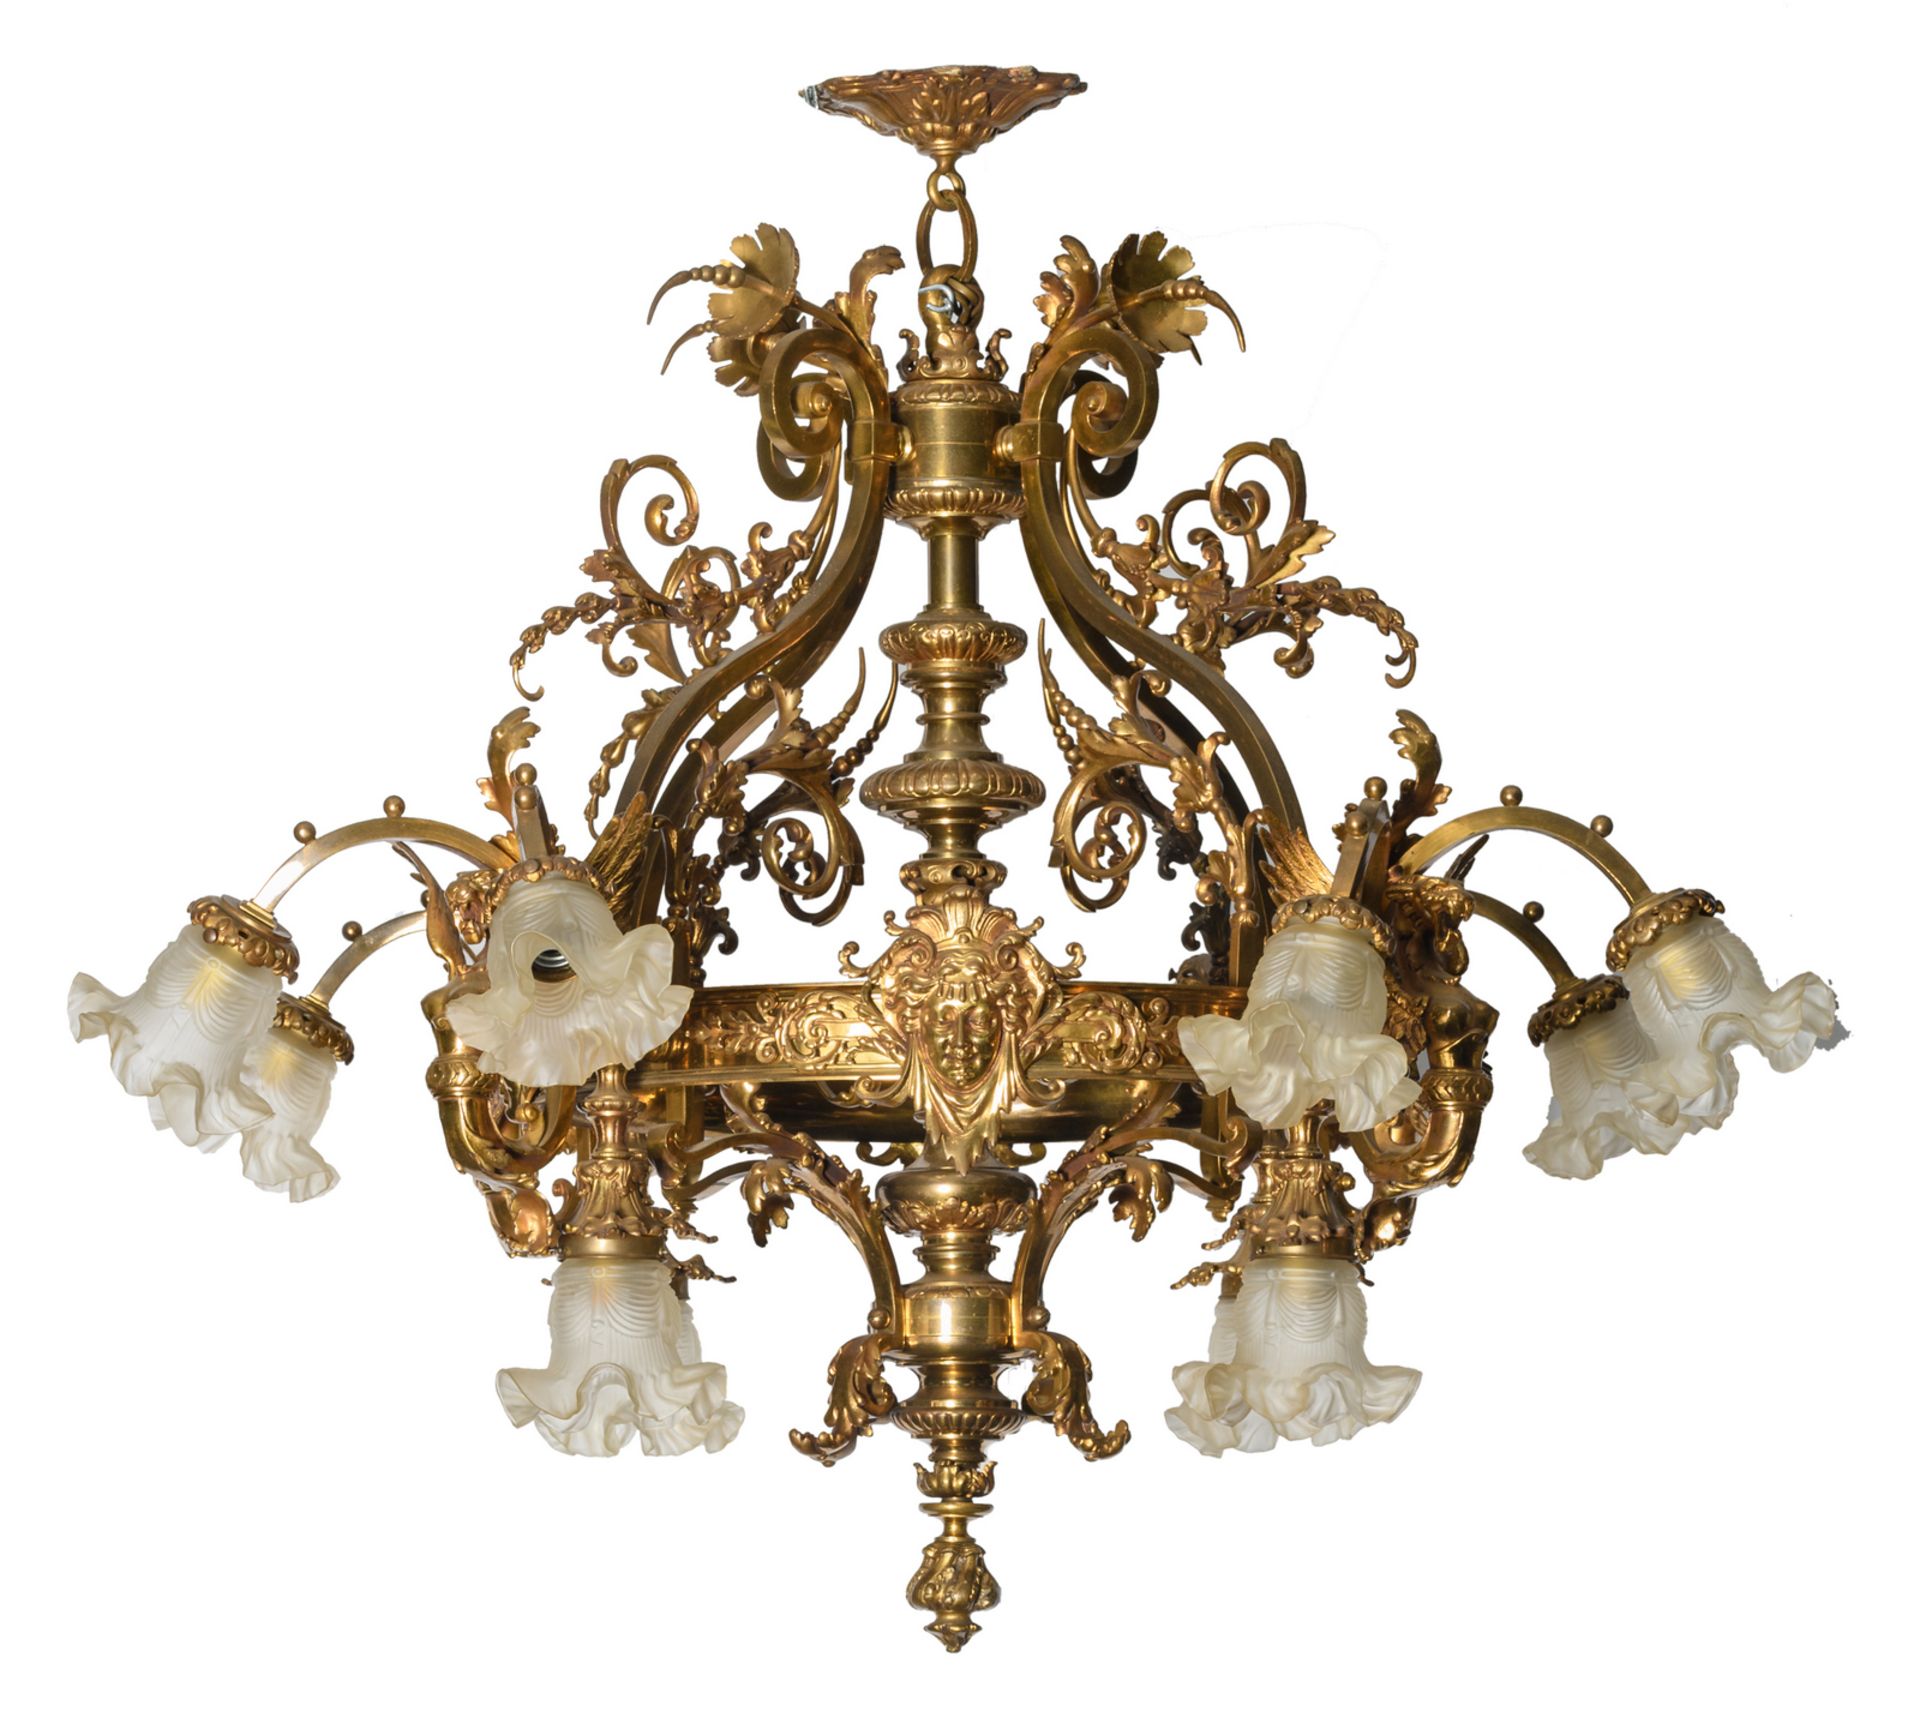 A rustic gilt bronze chandelier, H 96 - W 116 cm